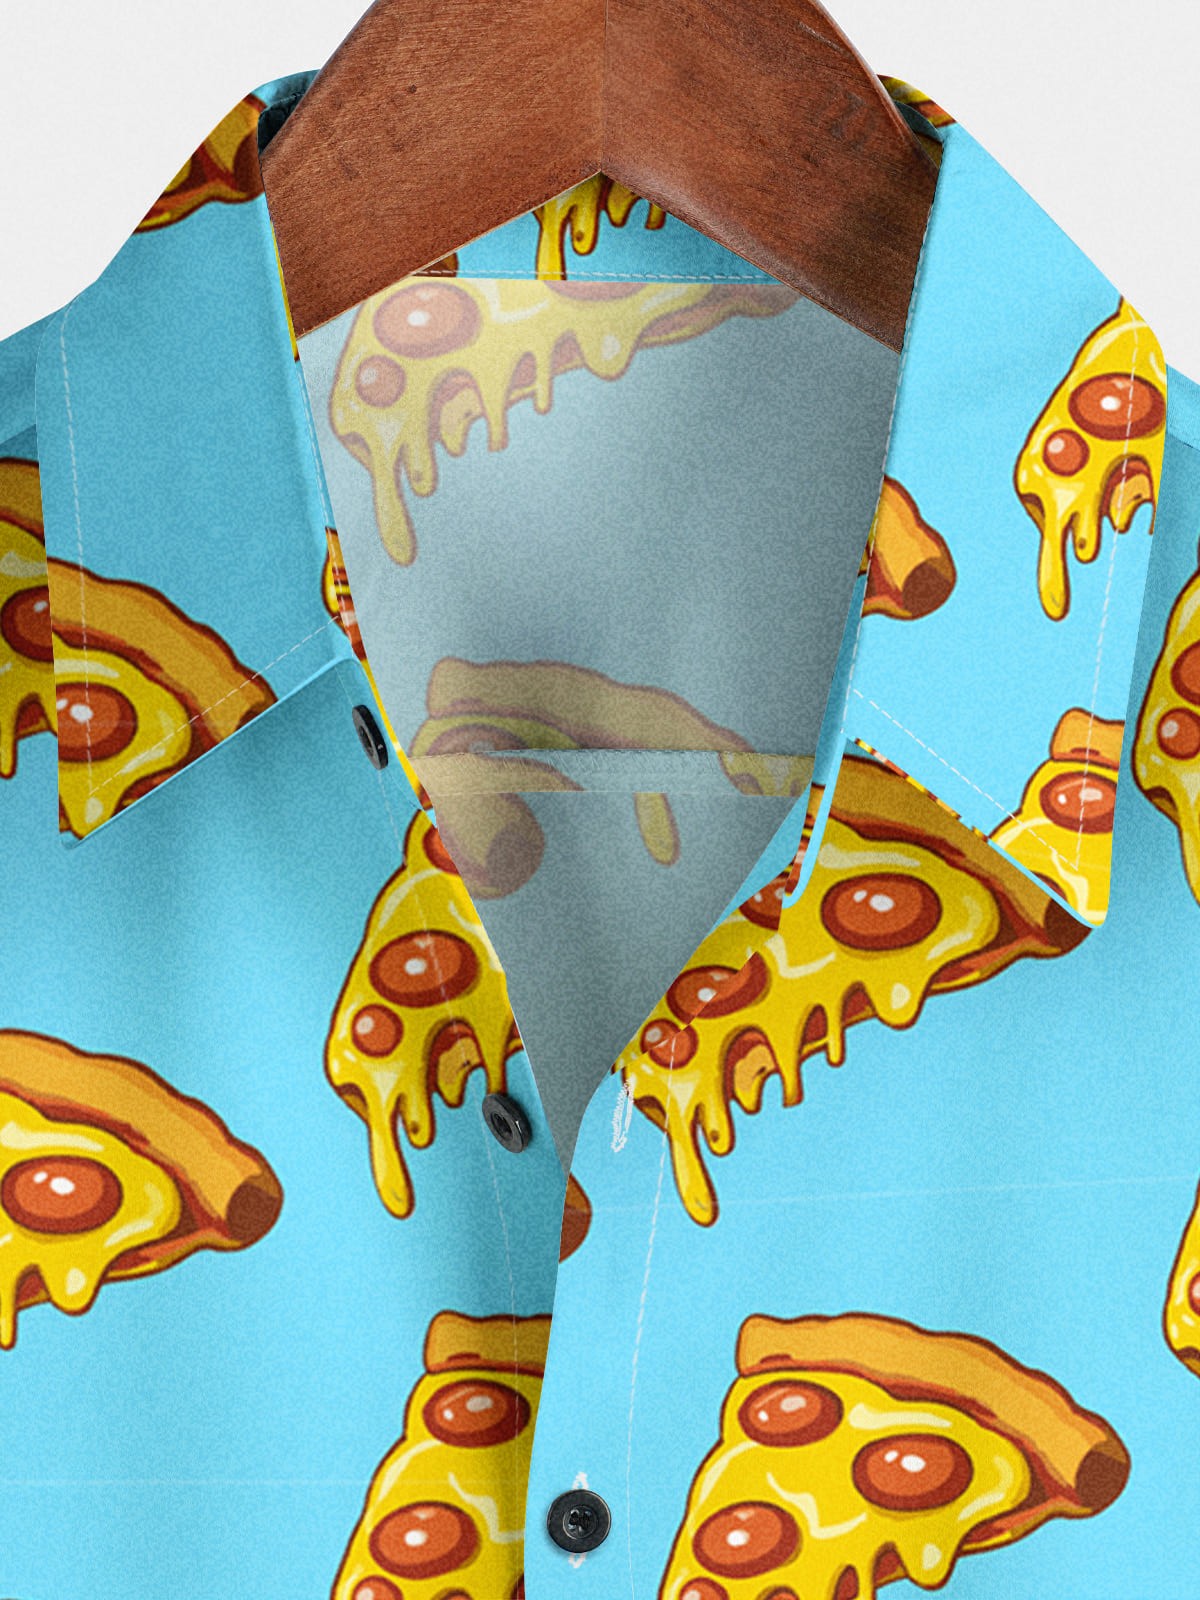 Men's Pizza Print Short Sleeve Shirt